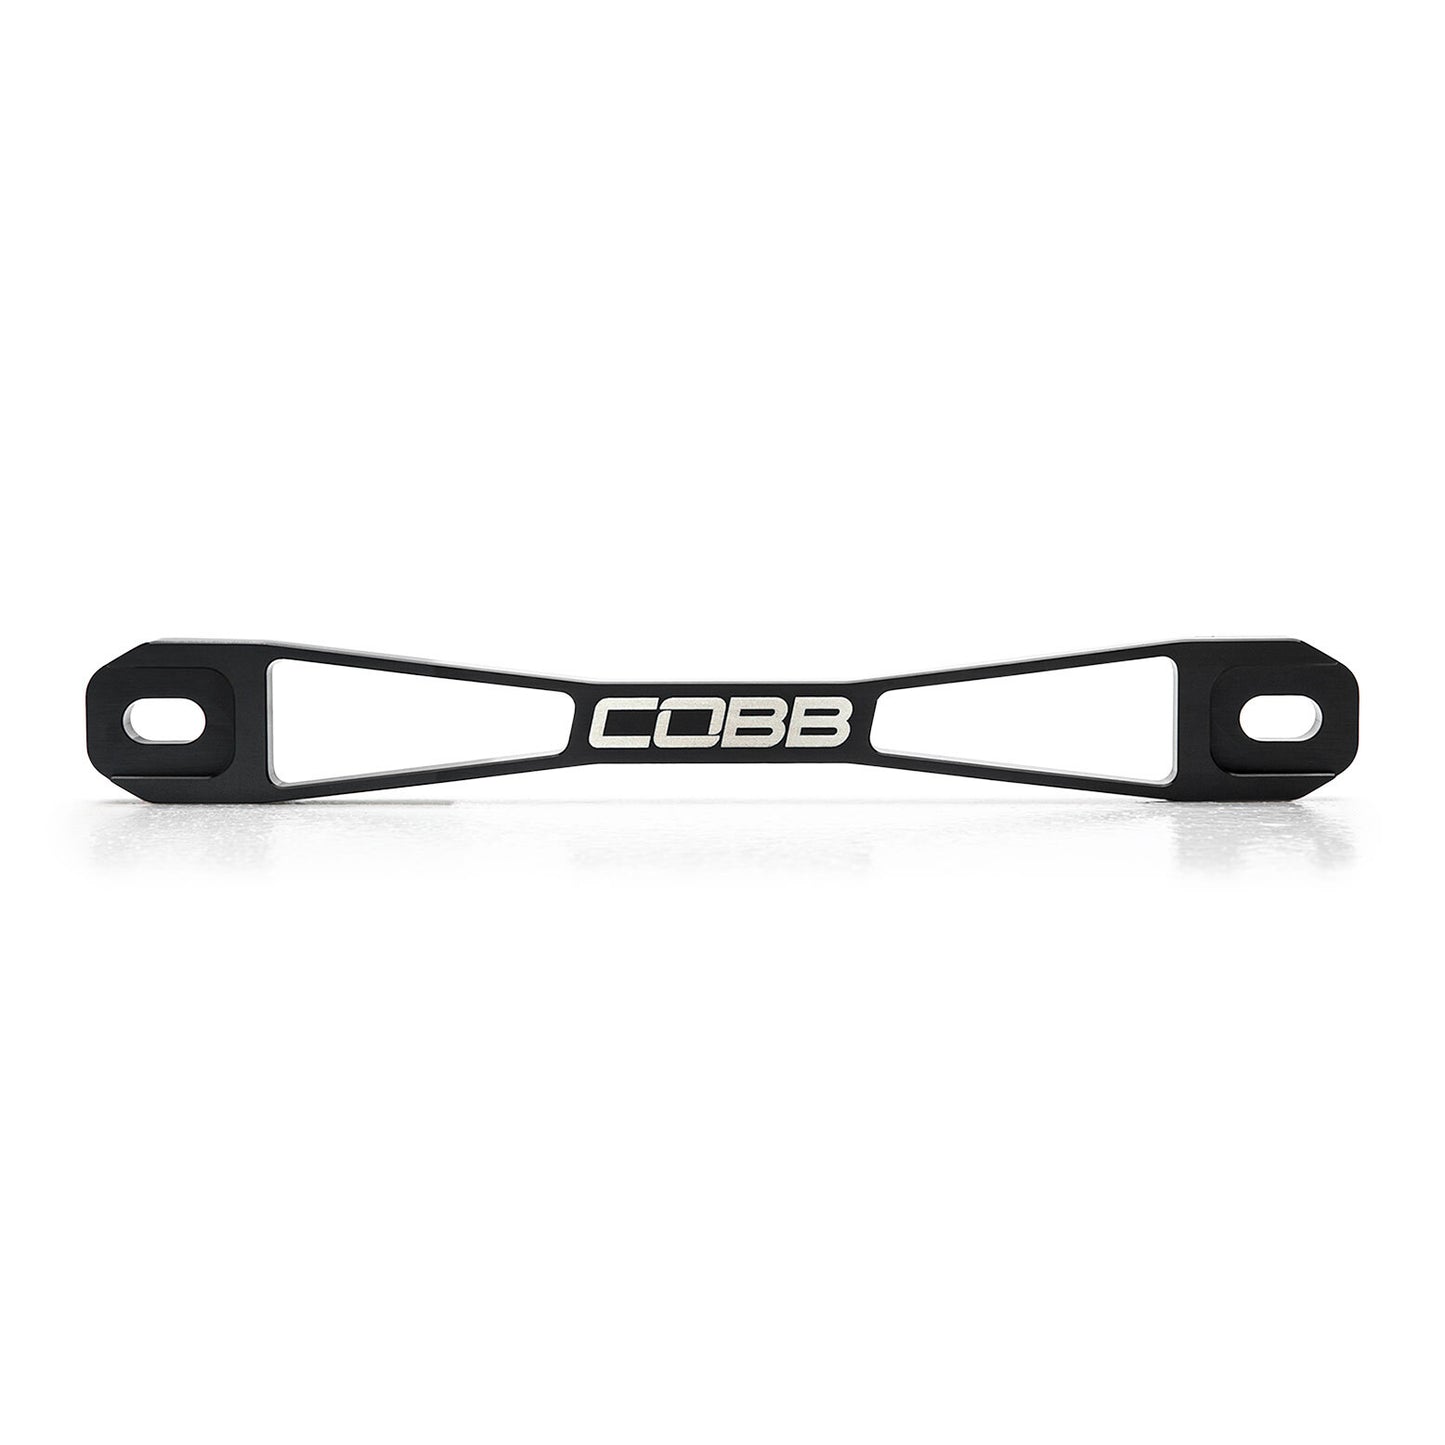 Cobb Tuning - Battery Tie Down - Subaru All Models